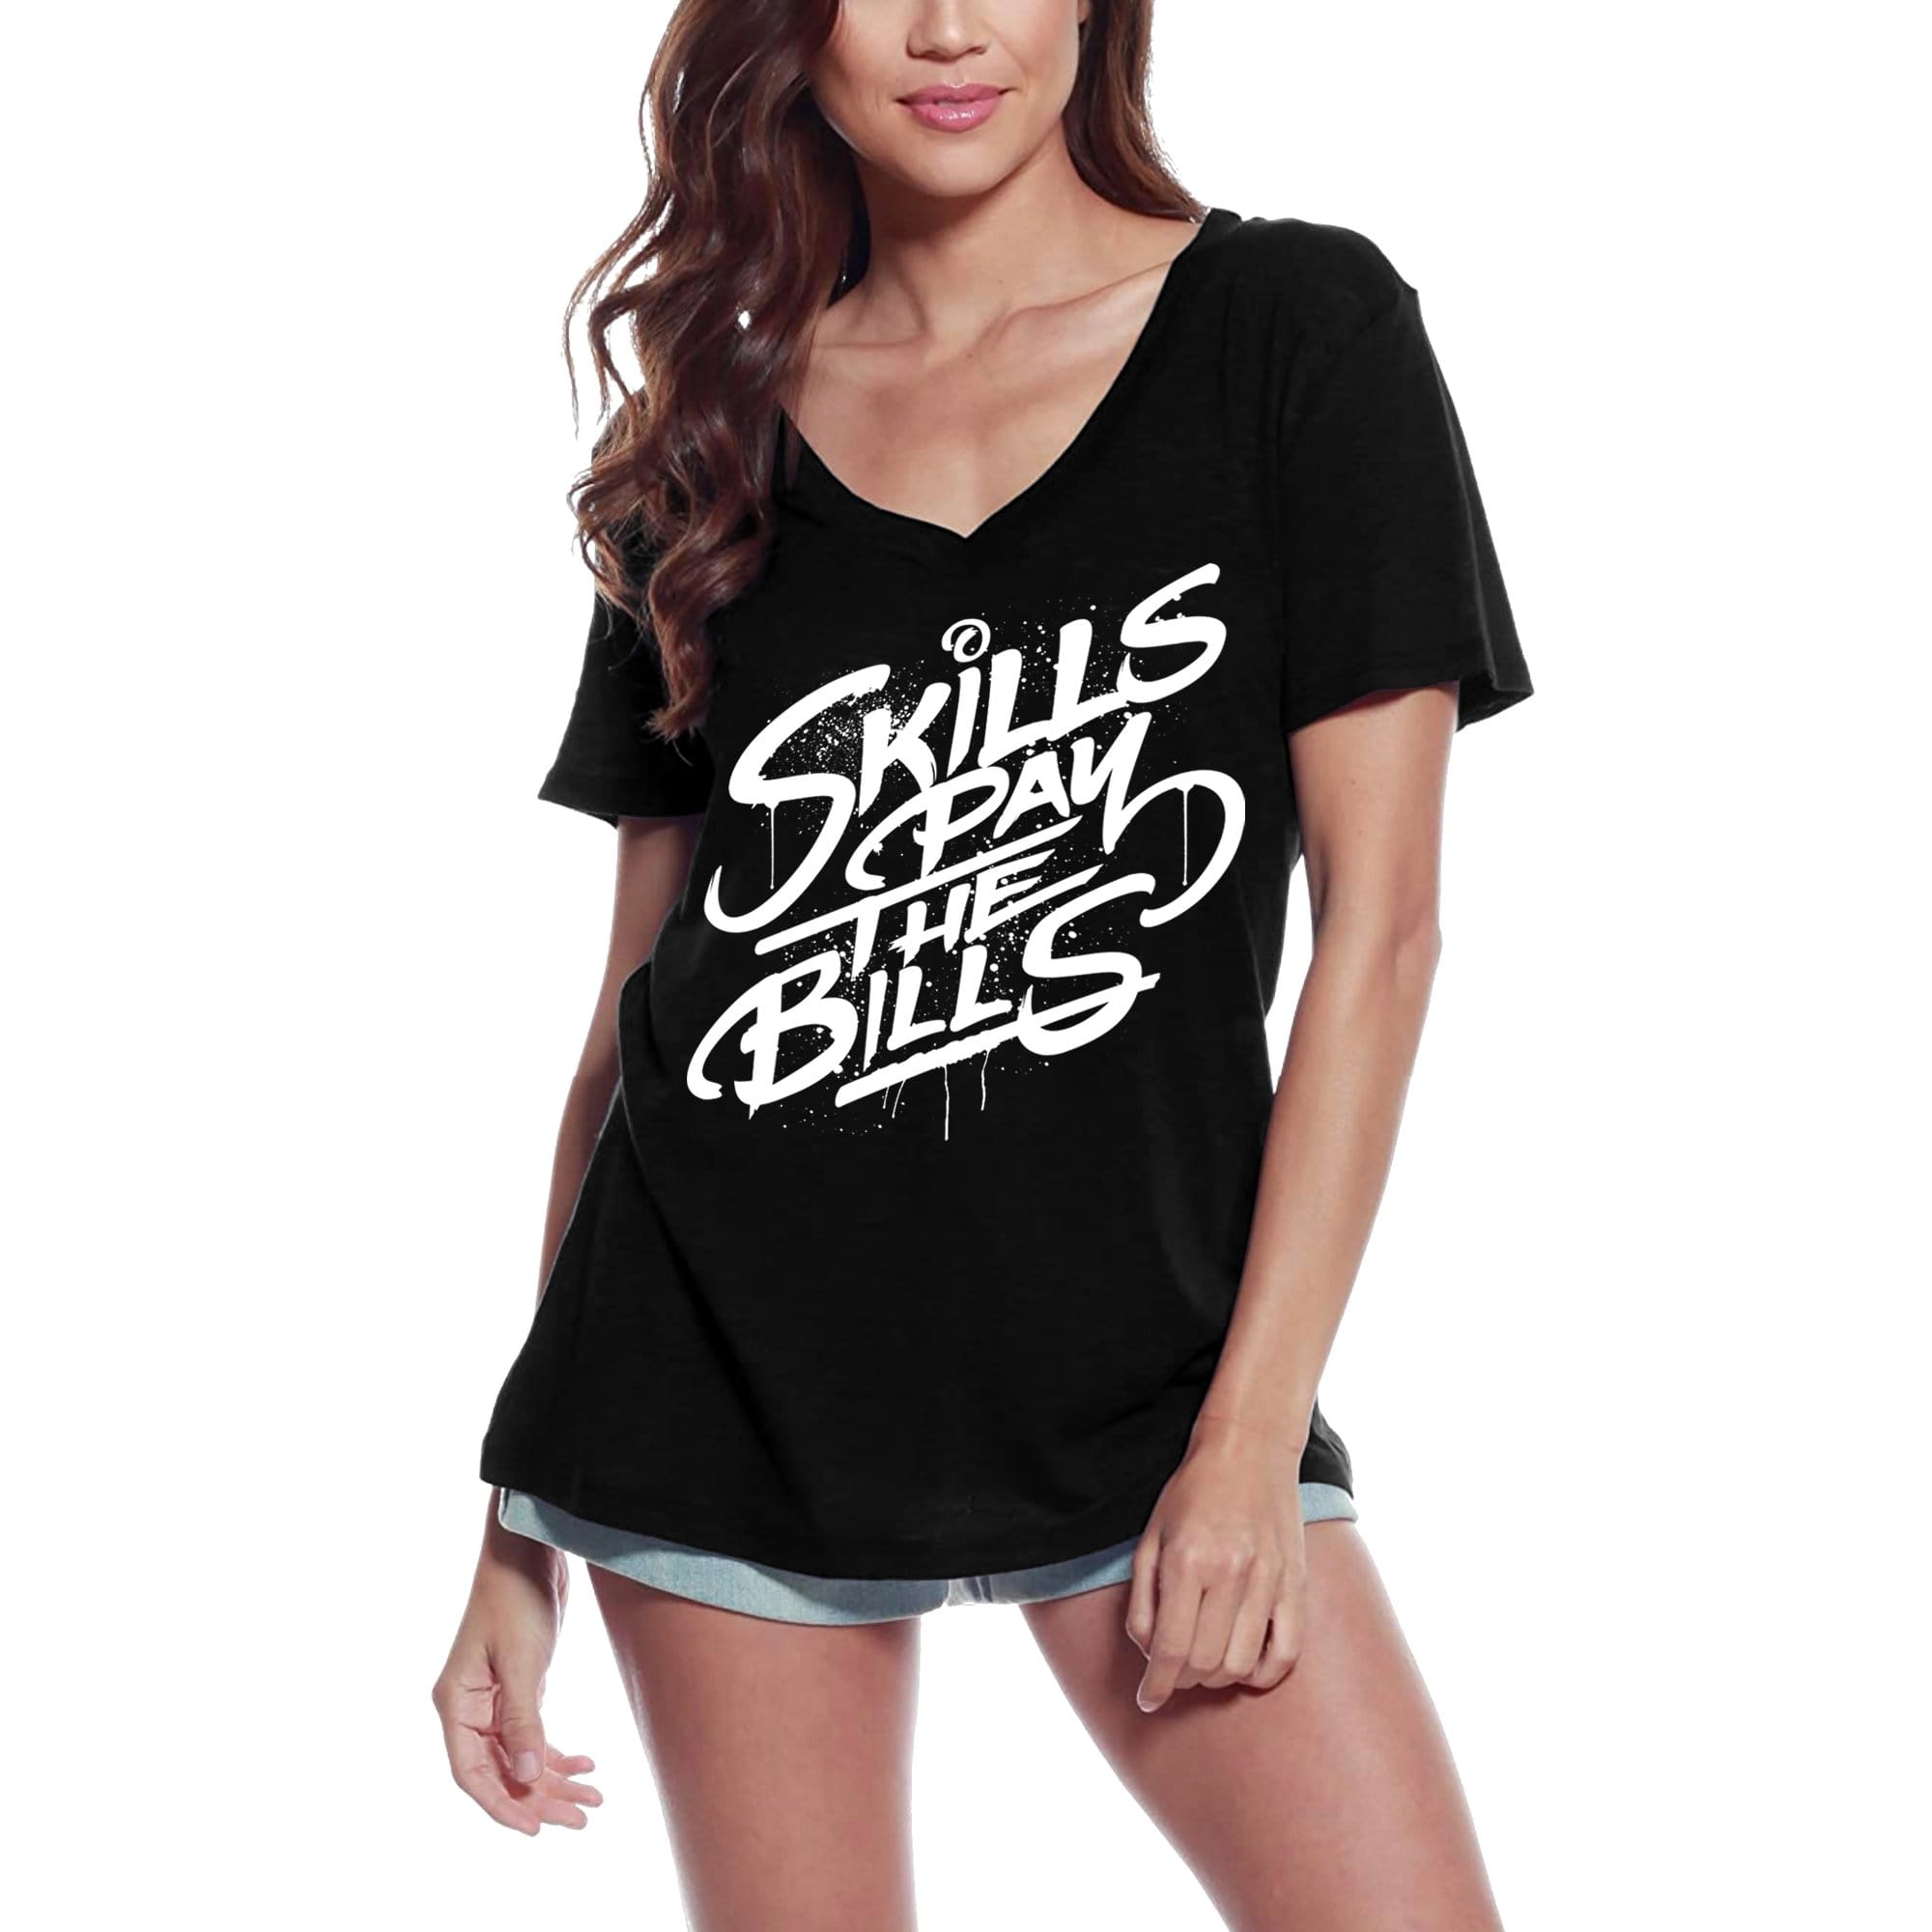 ULTRABASIC Women's T-Shirt Skills Pay Bills - Sarcastic Funny Slogan  Graphic Tee